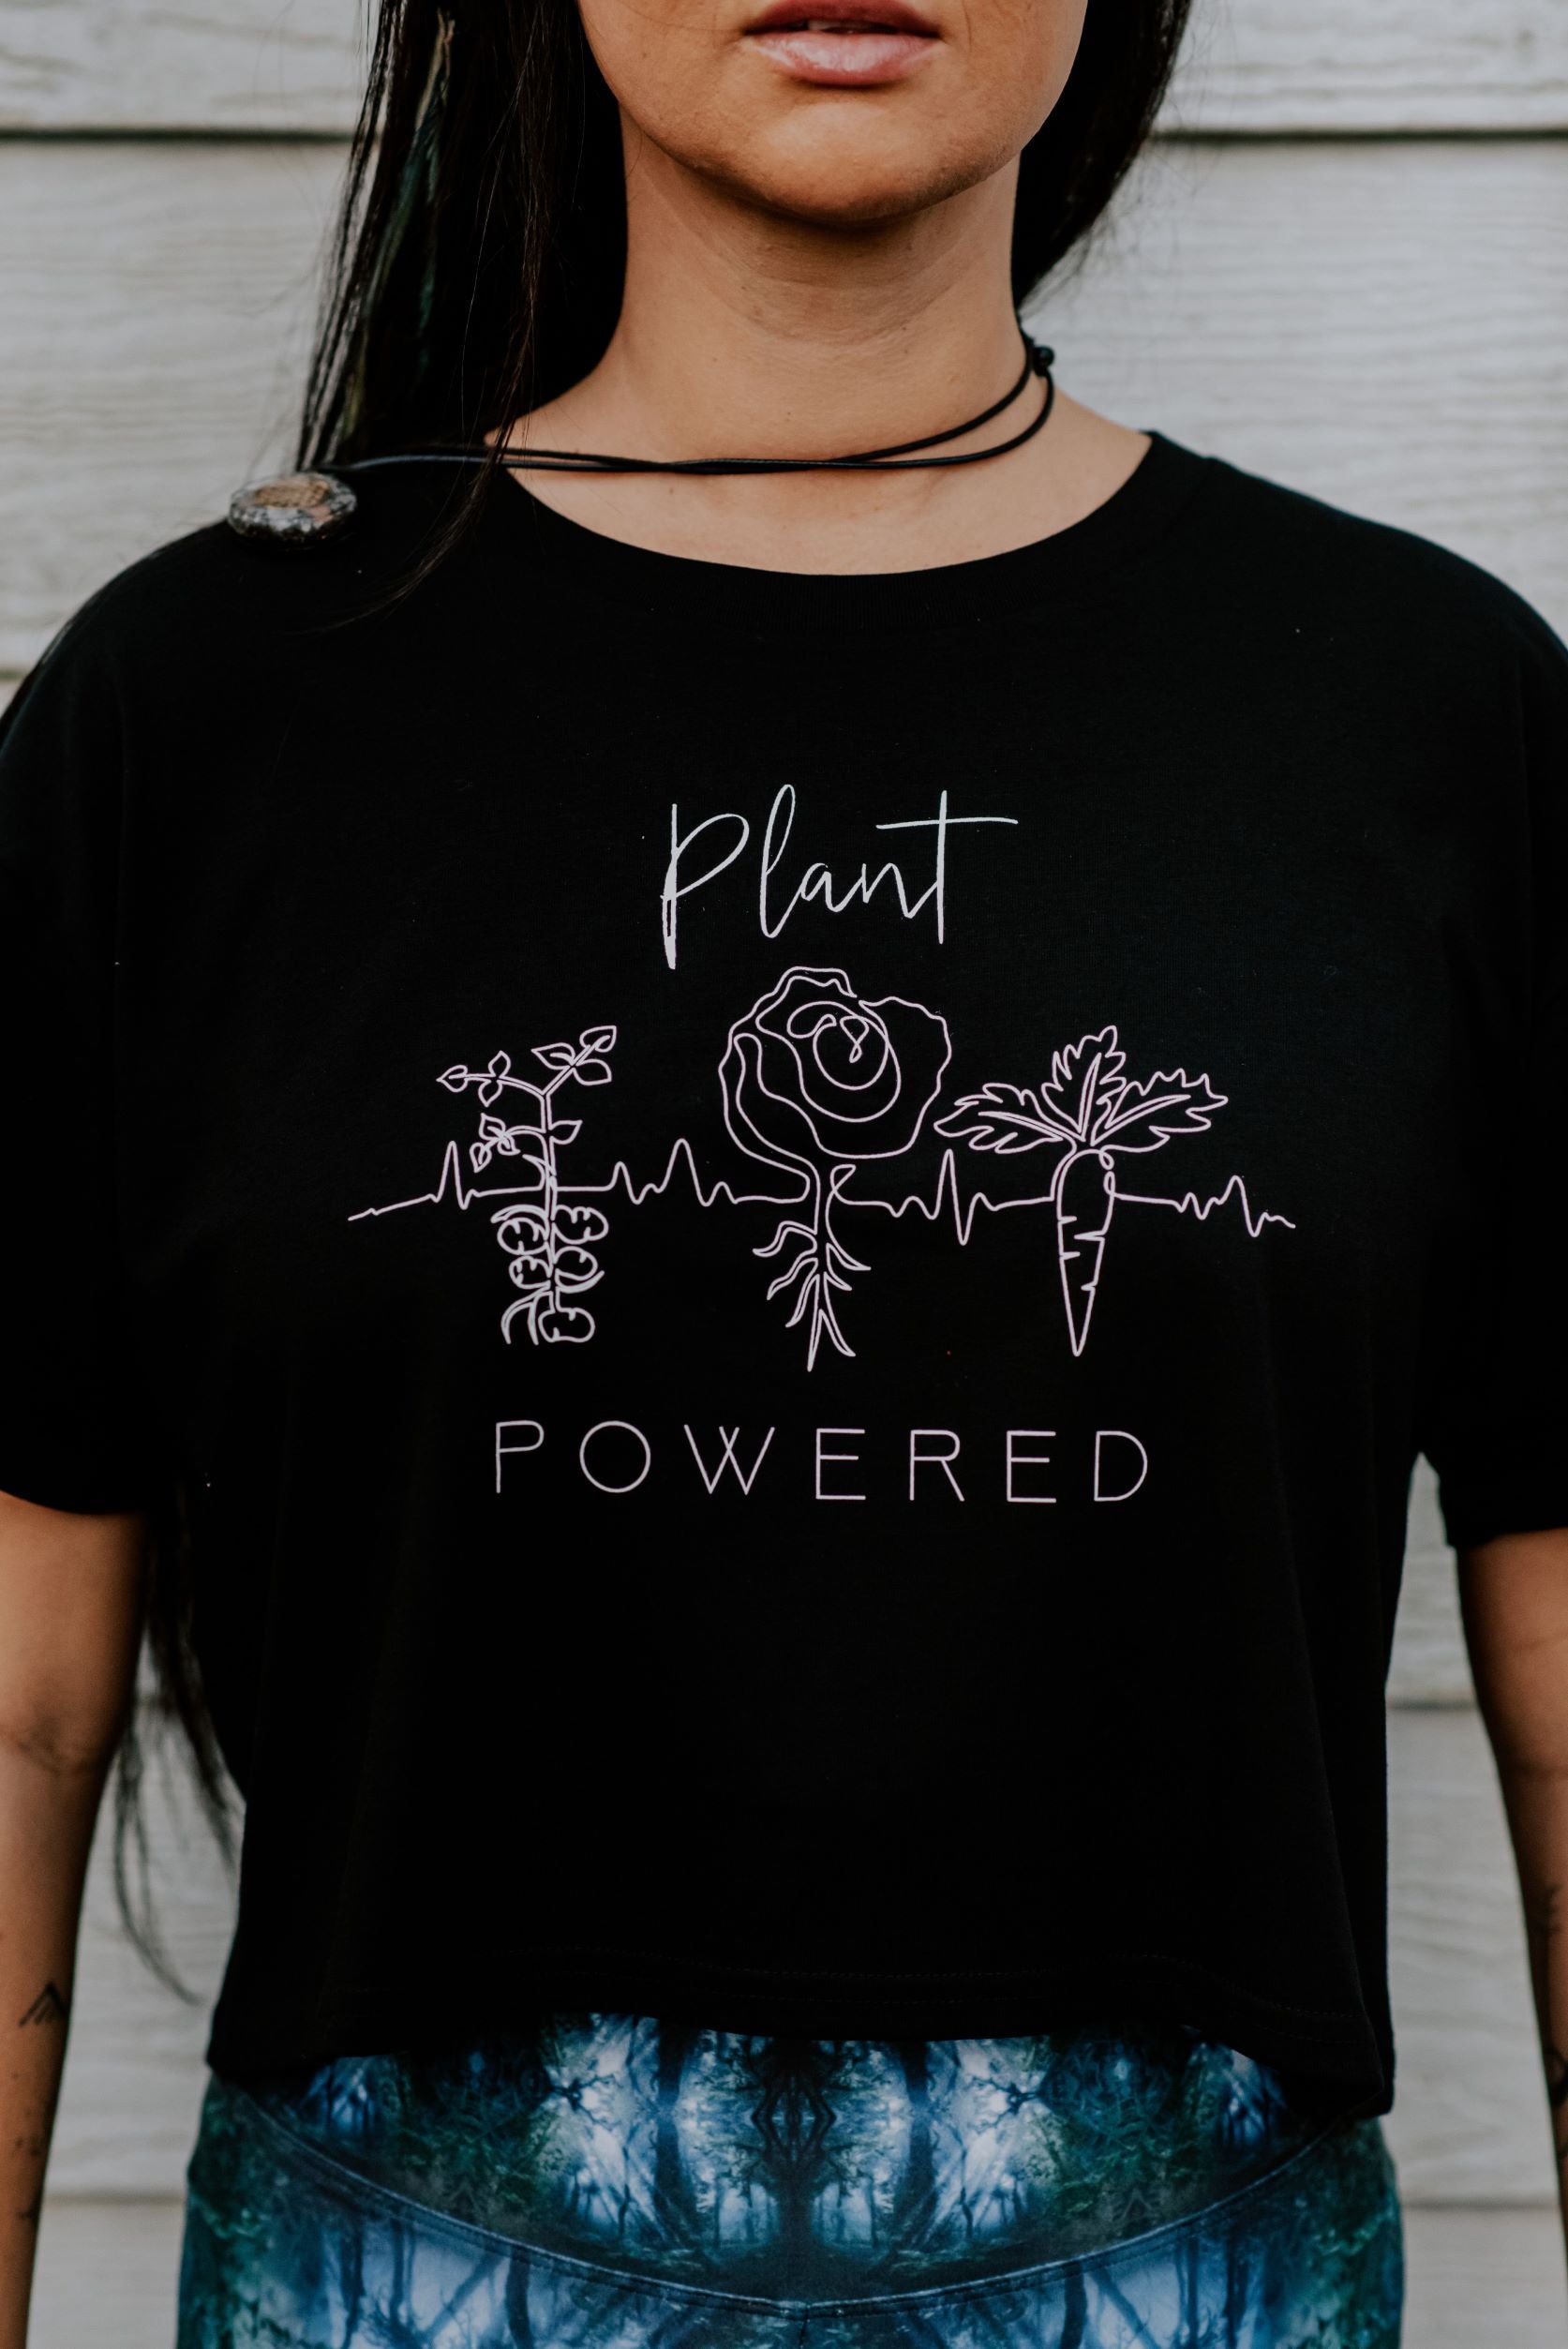 Plant Powered - Zen Warrior Shop